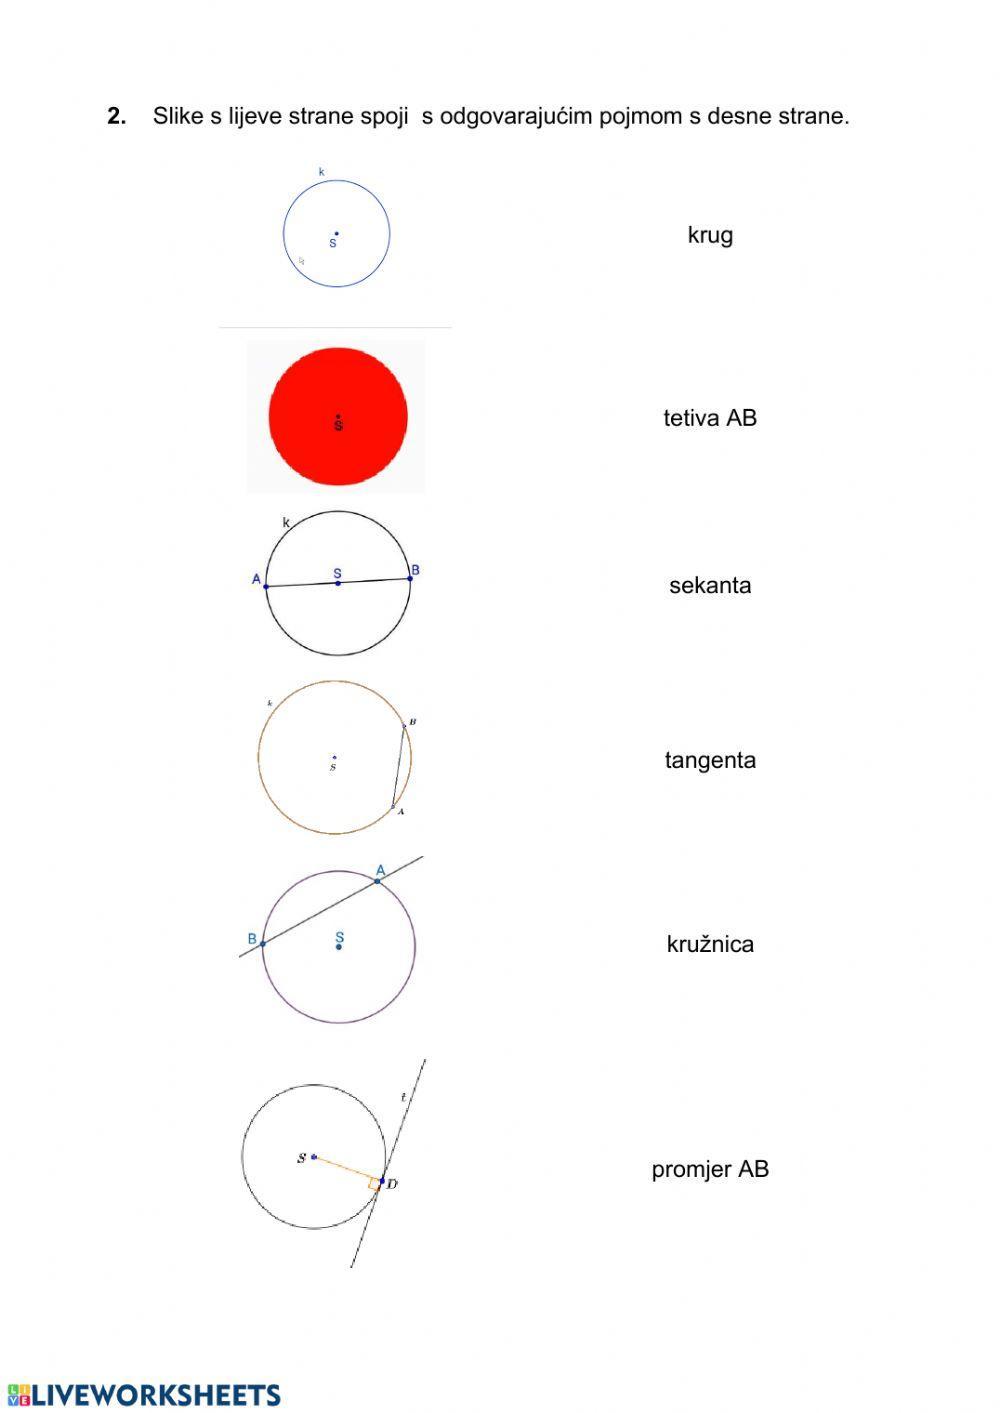 Krug i kružnica - osnovni pojmovi, međusobni položaji kružnice i kruga